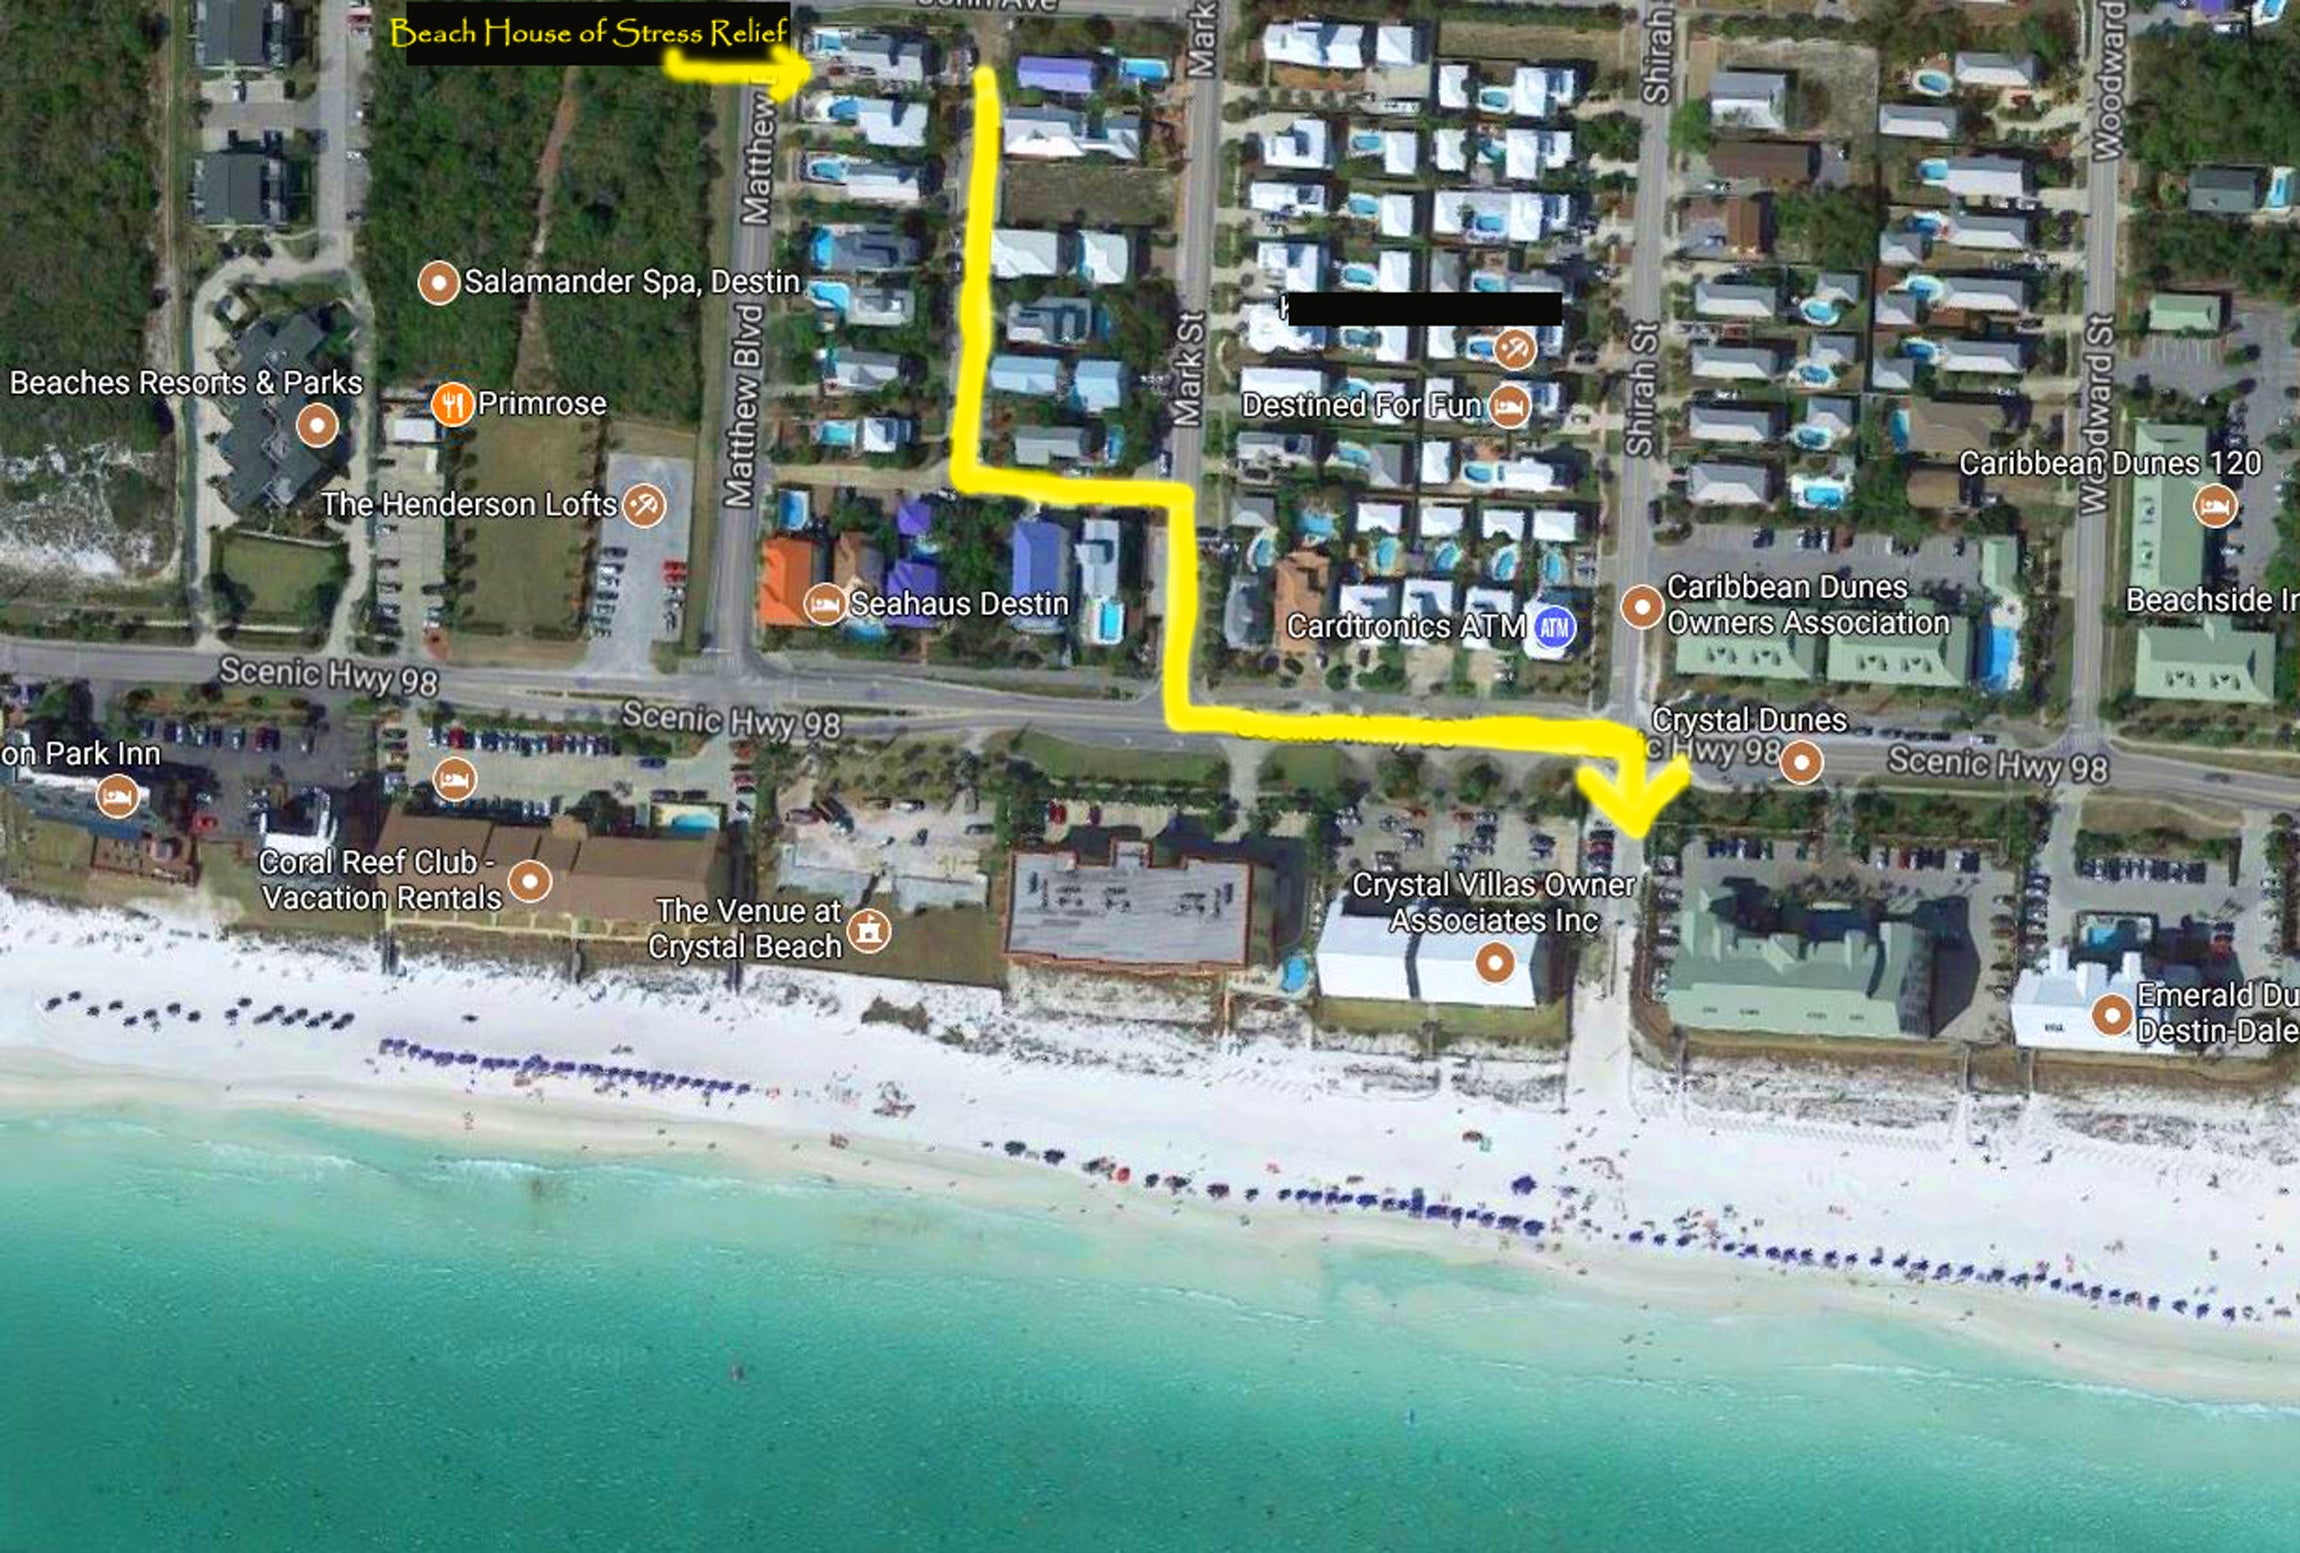 Map to closest beach access- Shirah St